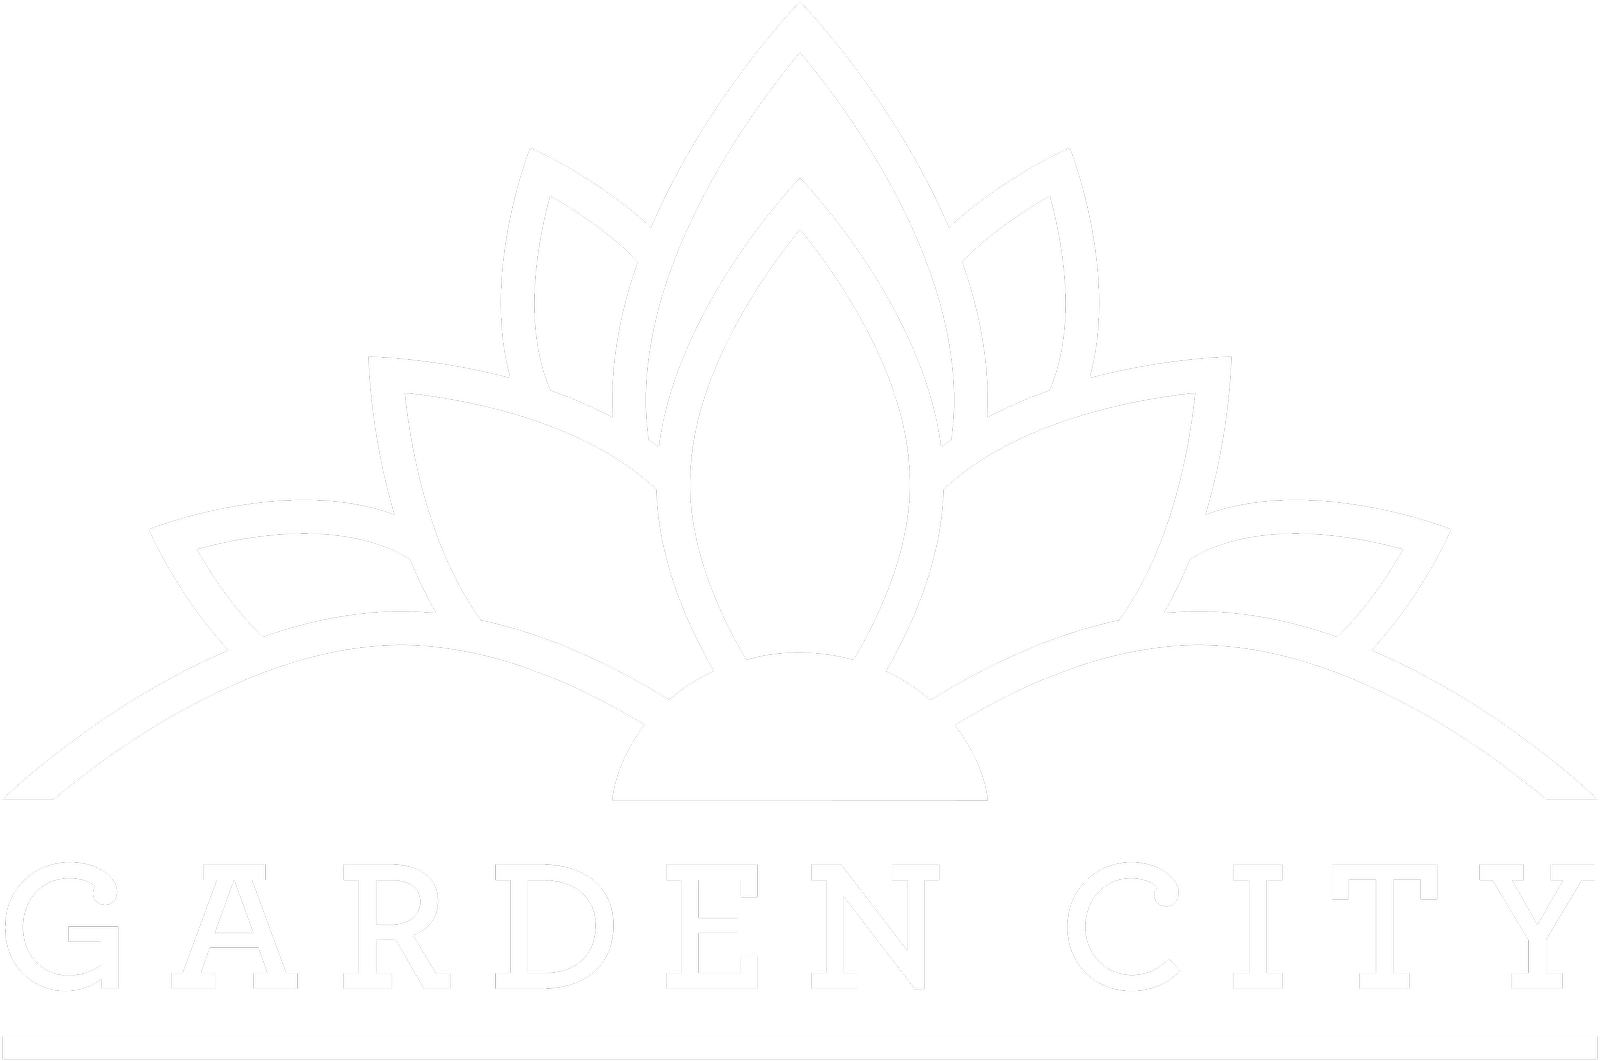 Garden City Project